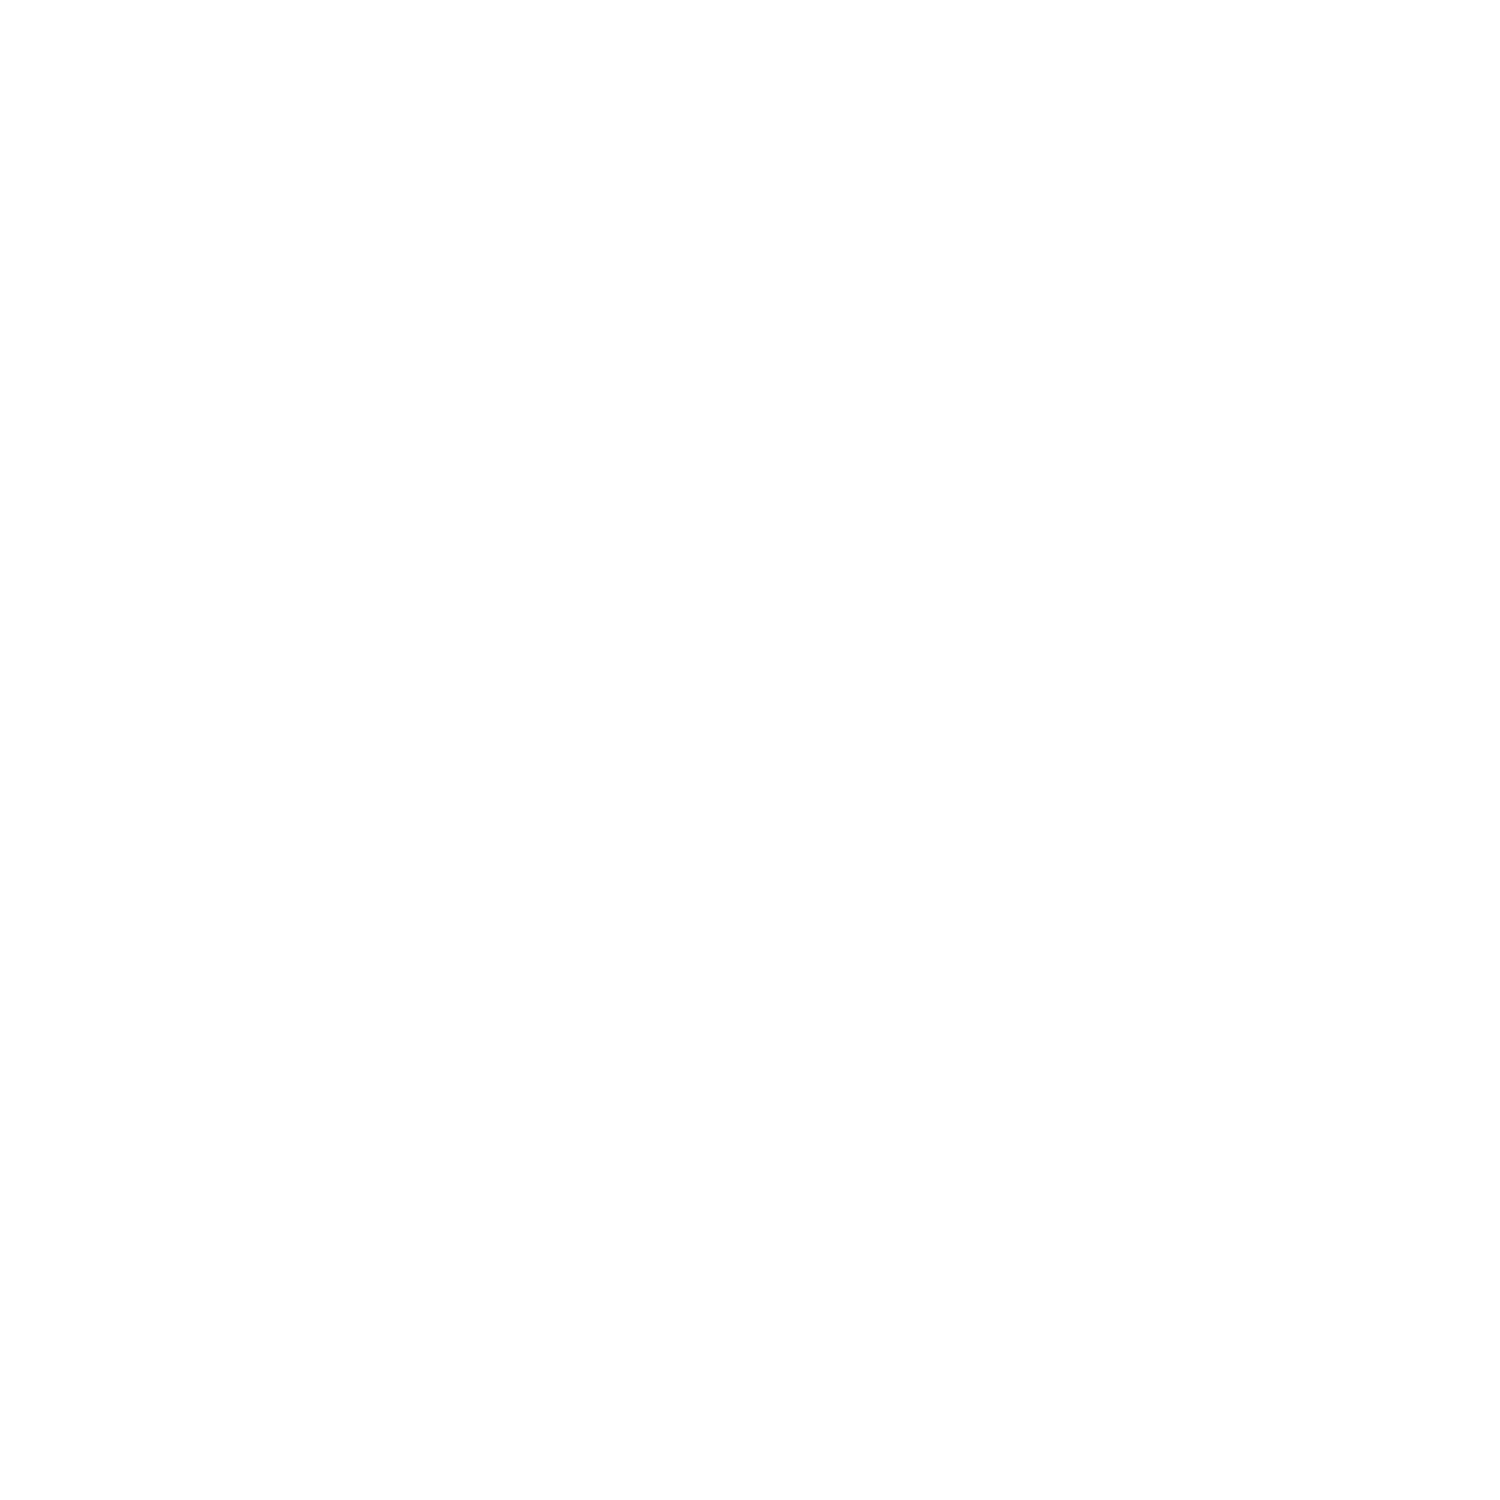 The Beauty Room Co. 